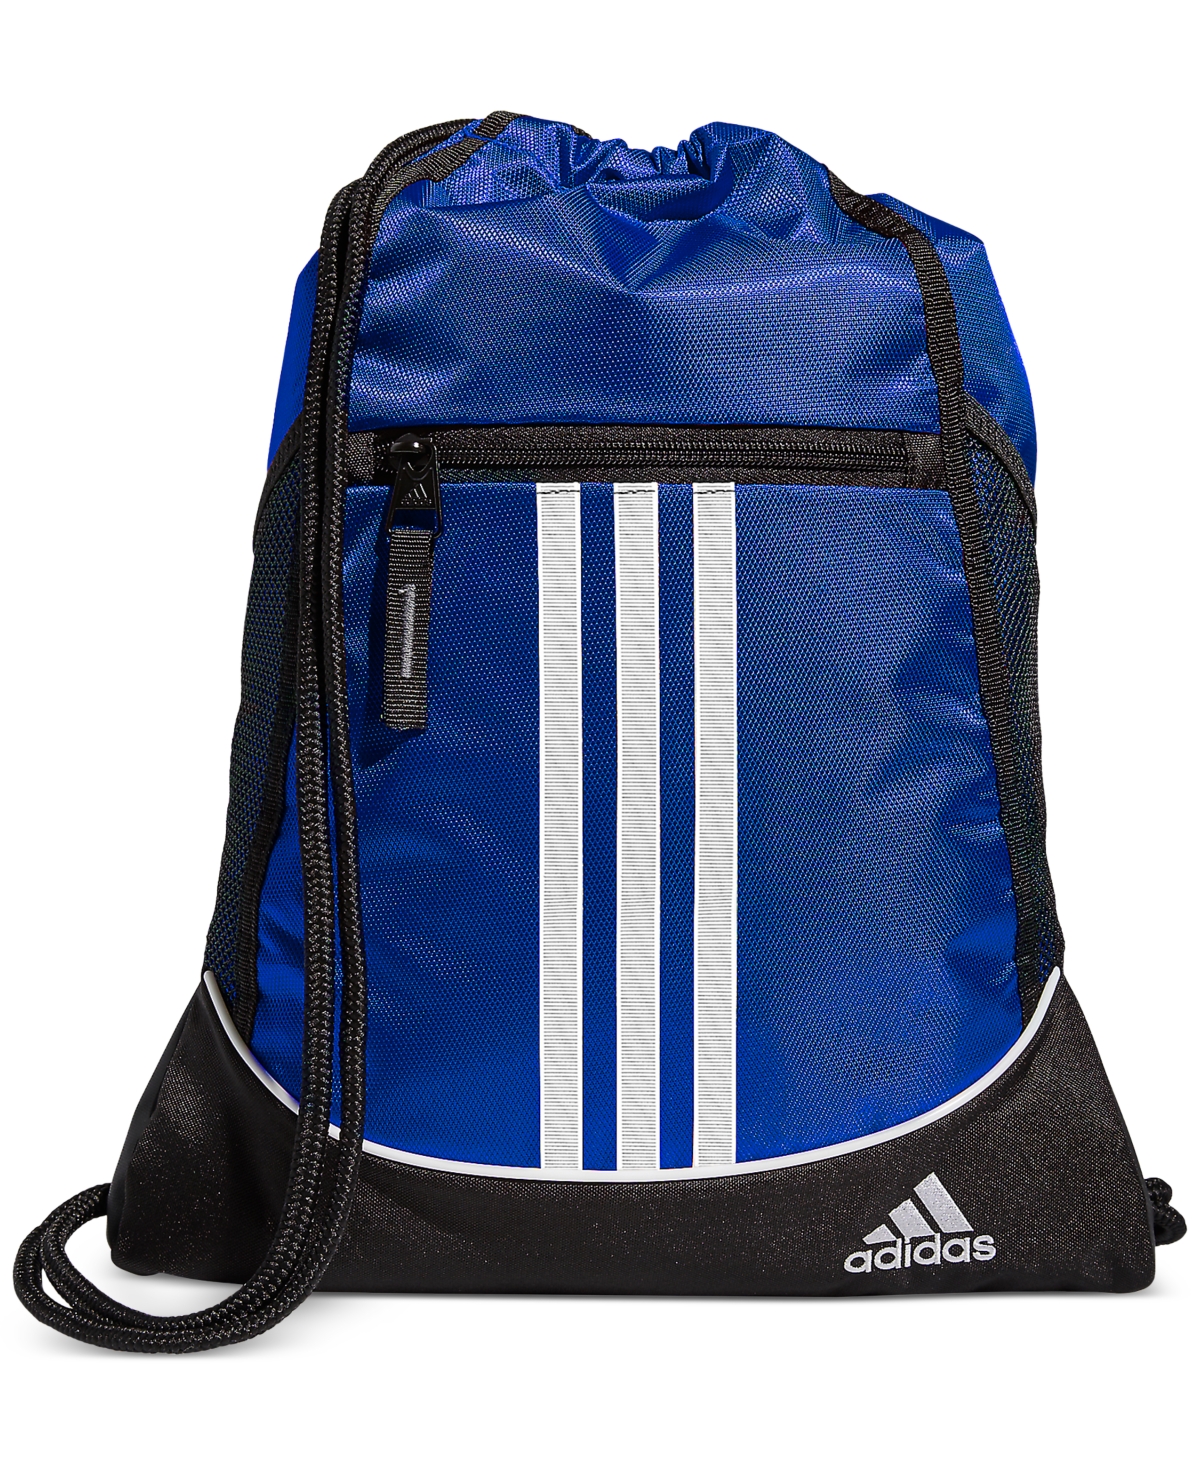 Adidas Originals Alliance Ii Sackpack In Blue